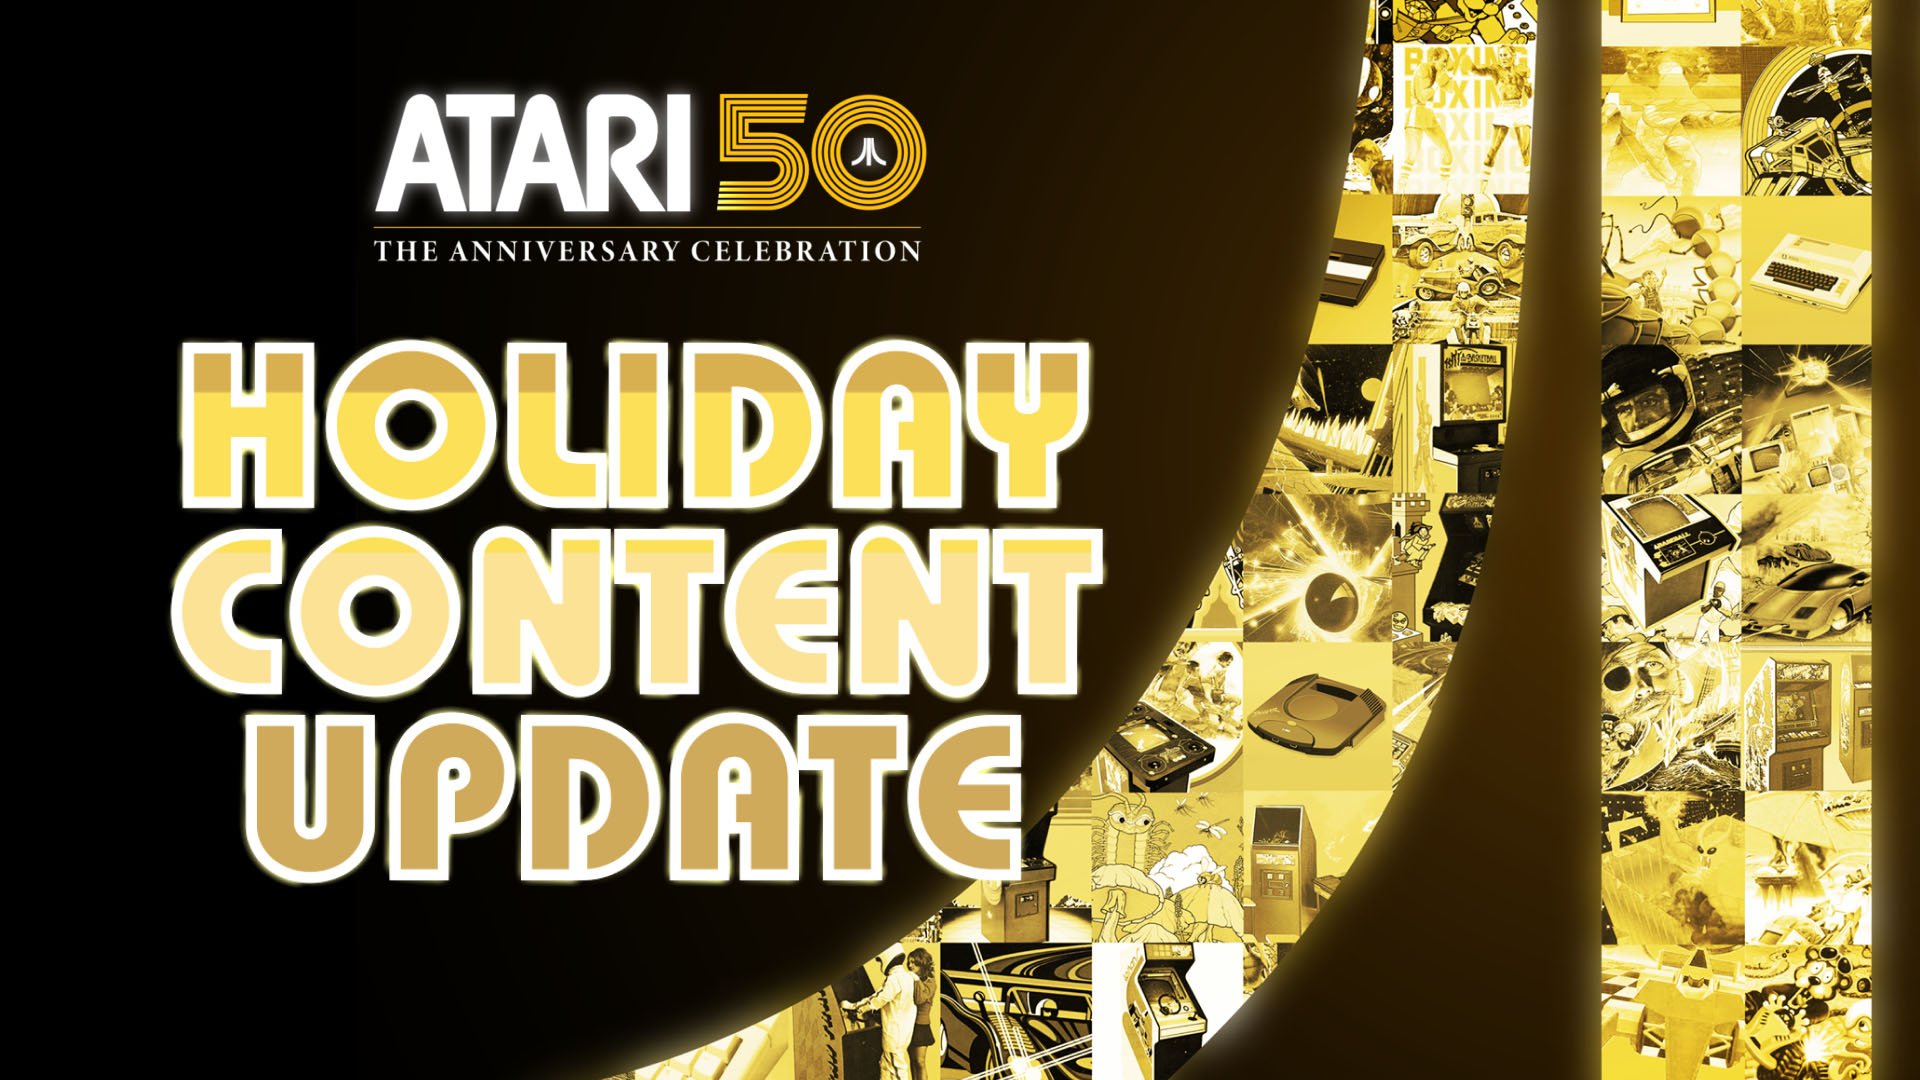 atari-50-holiday-content-update